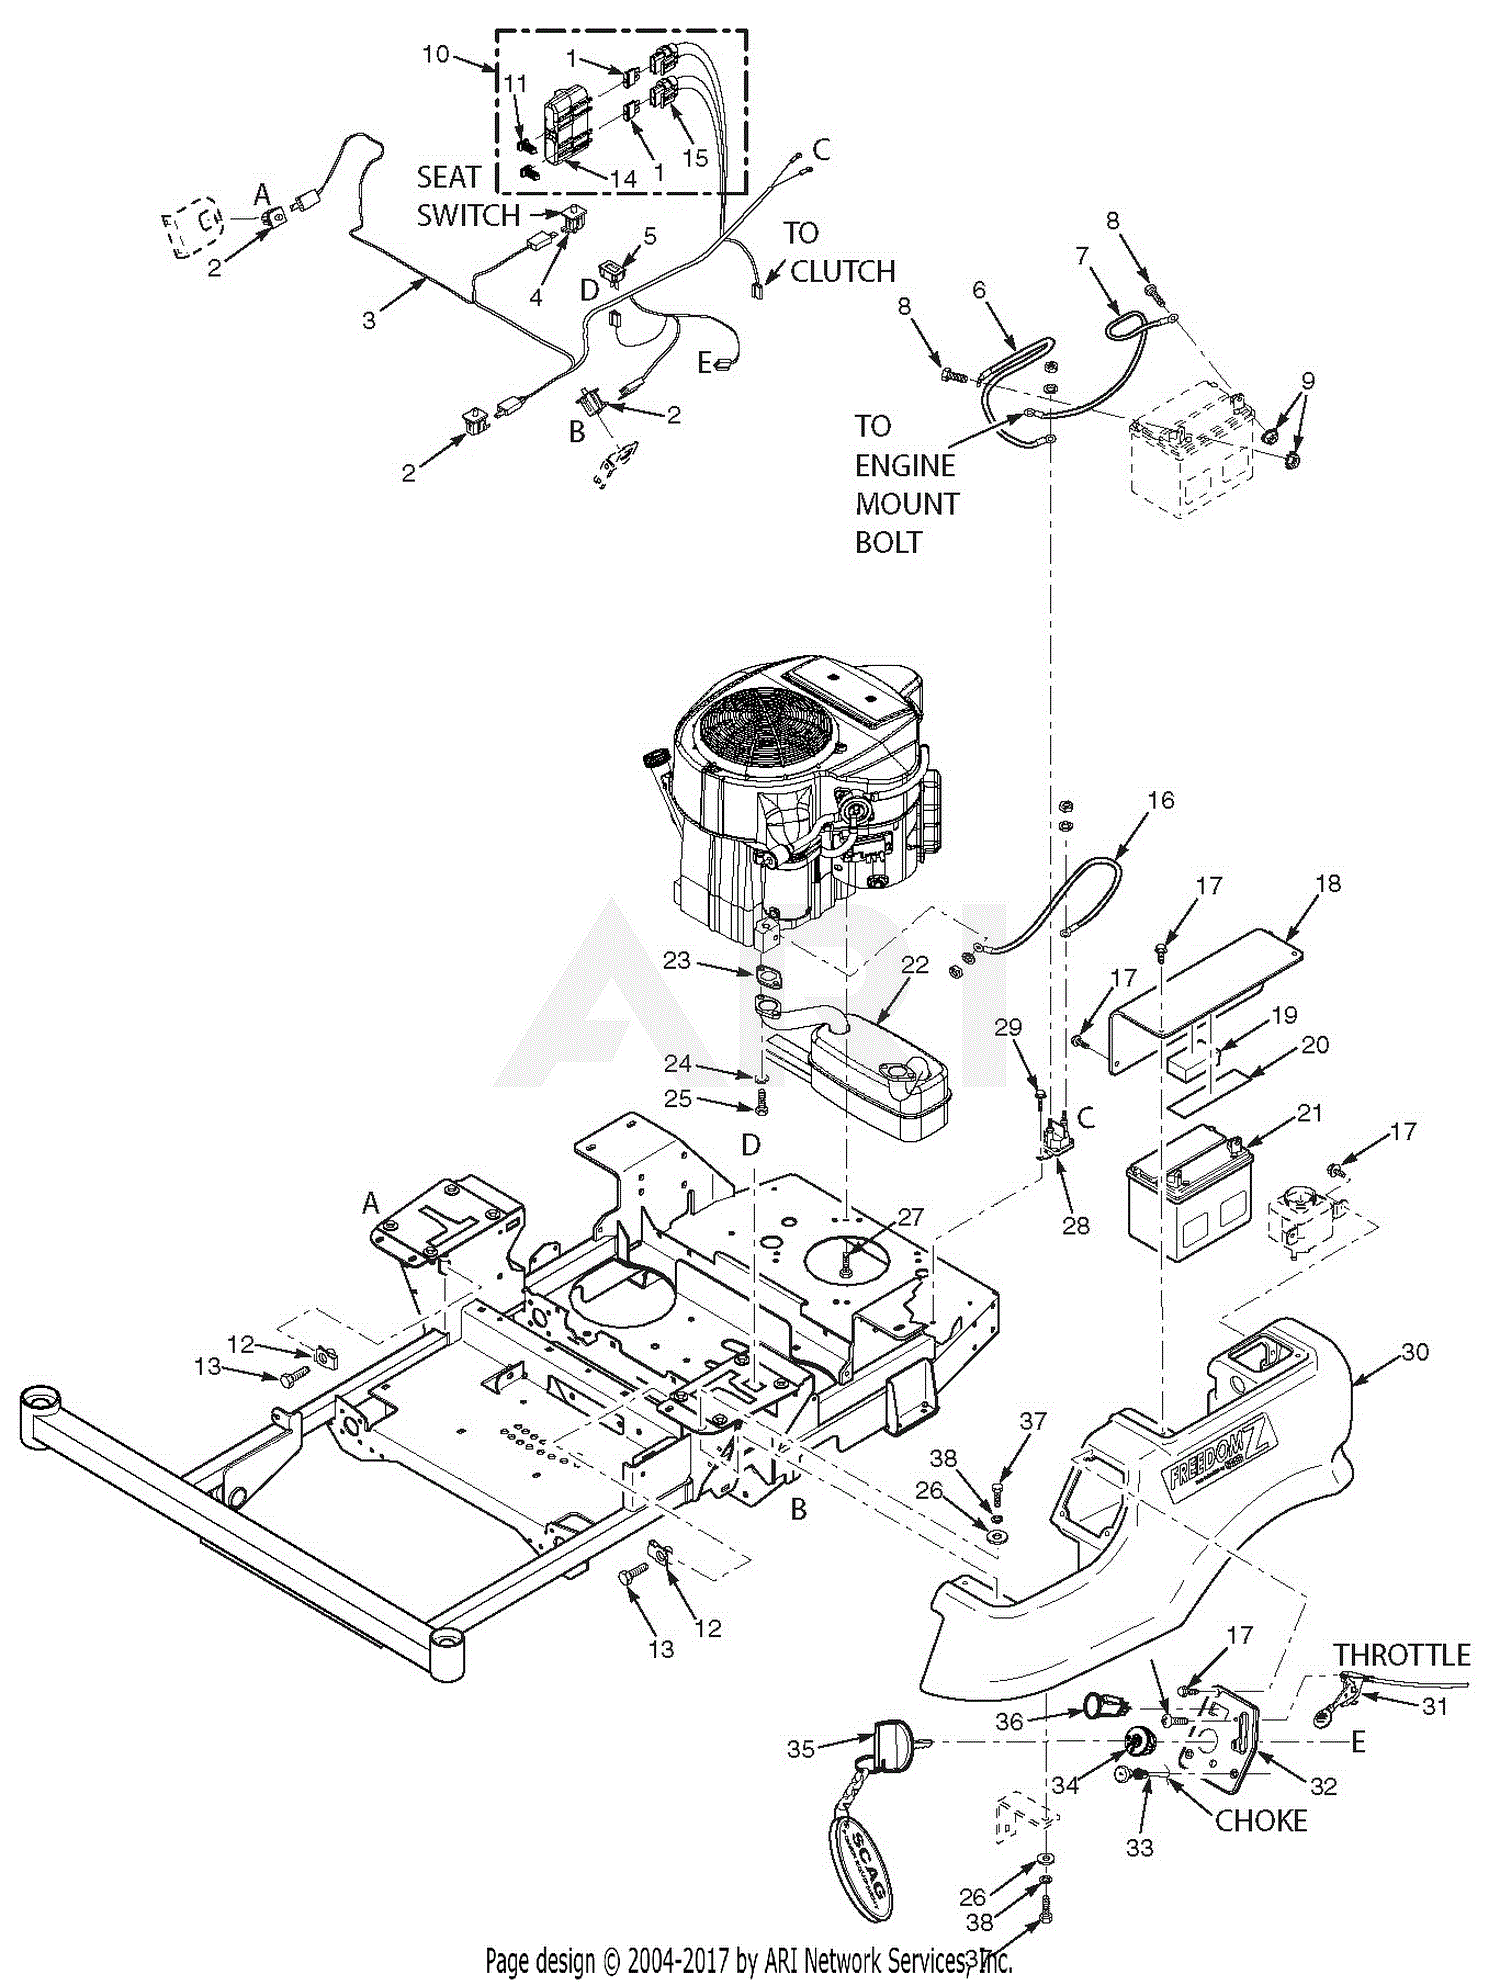 Wiring Diagram For A Craftsman Lawn Mower